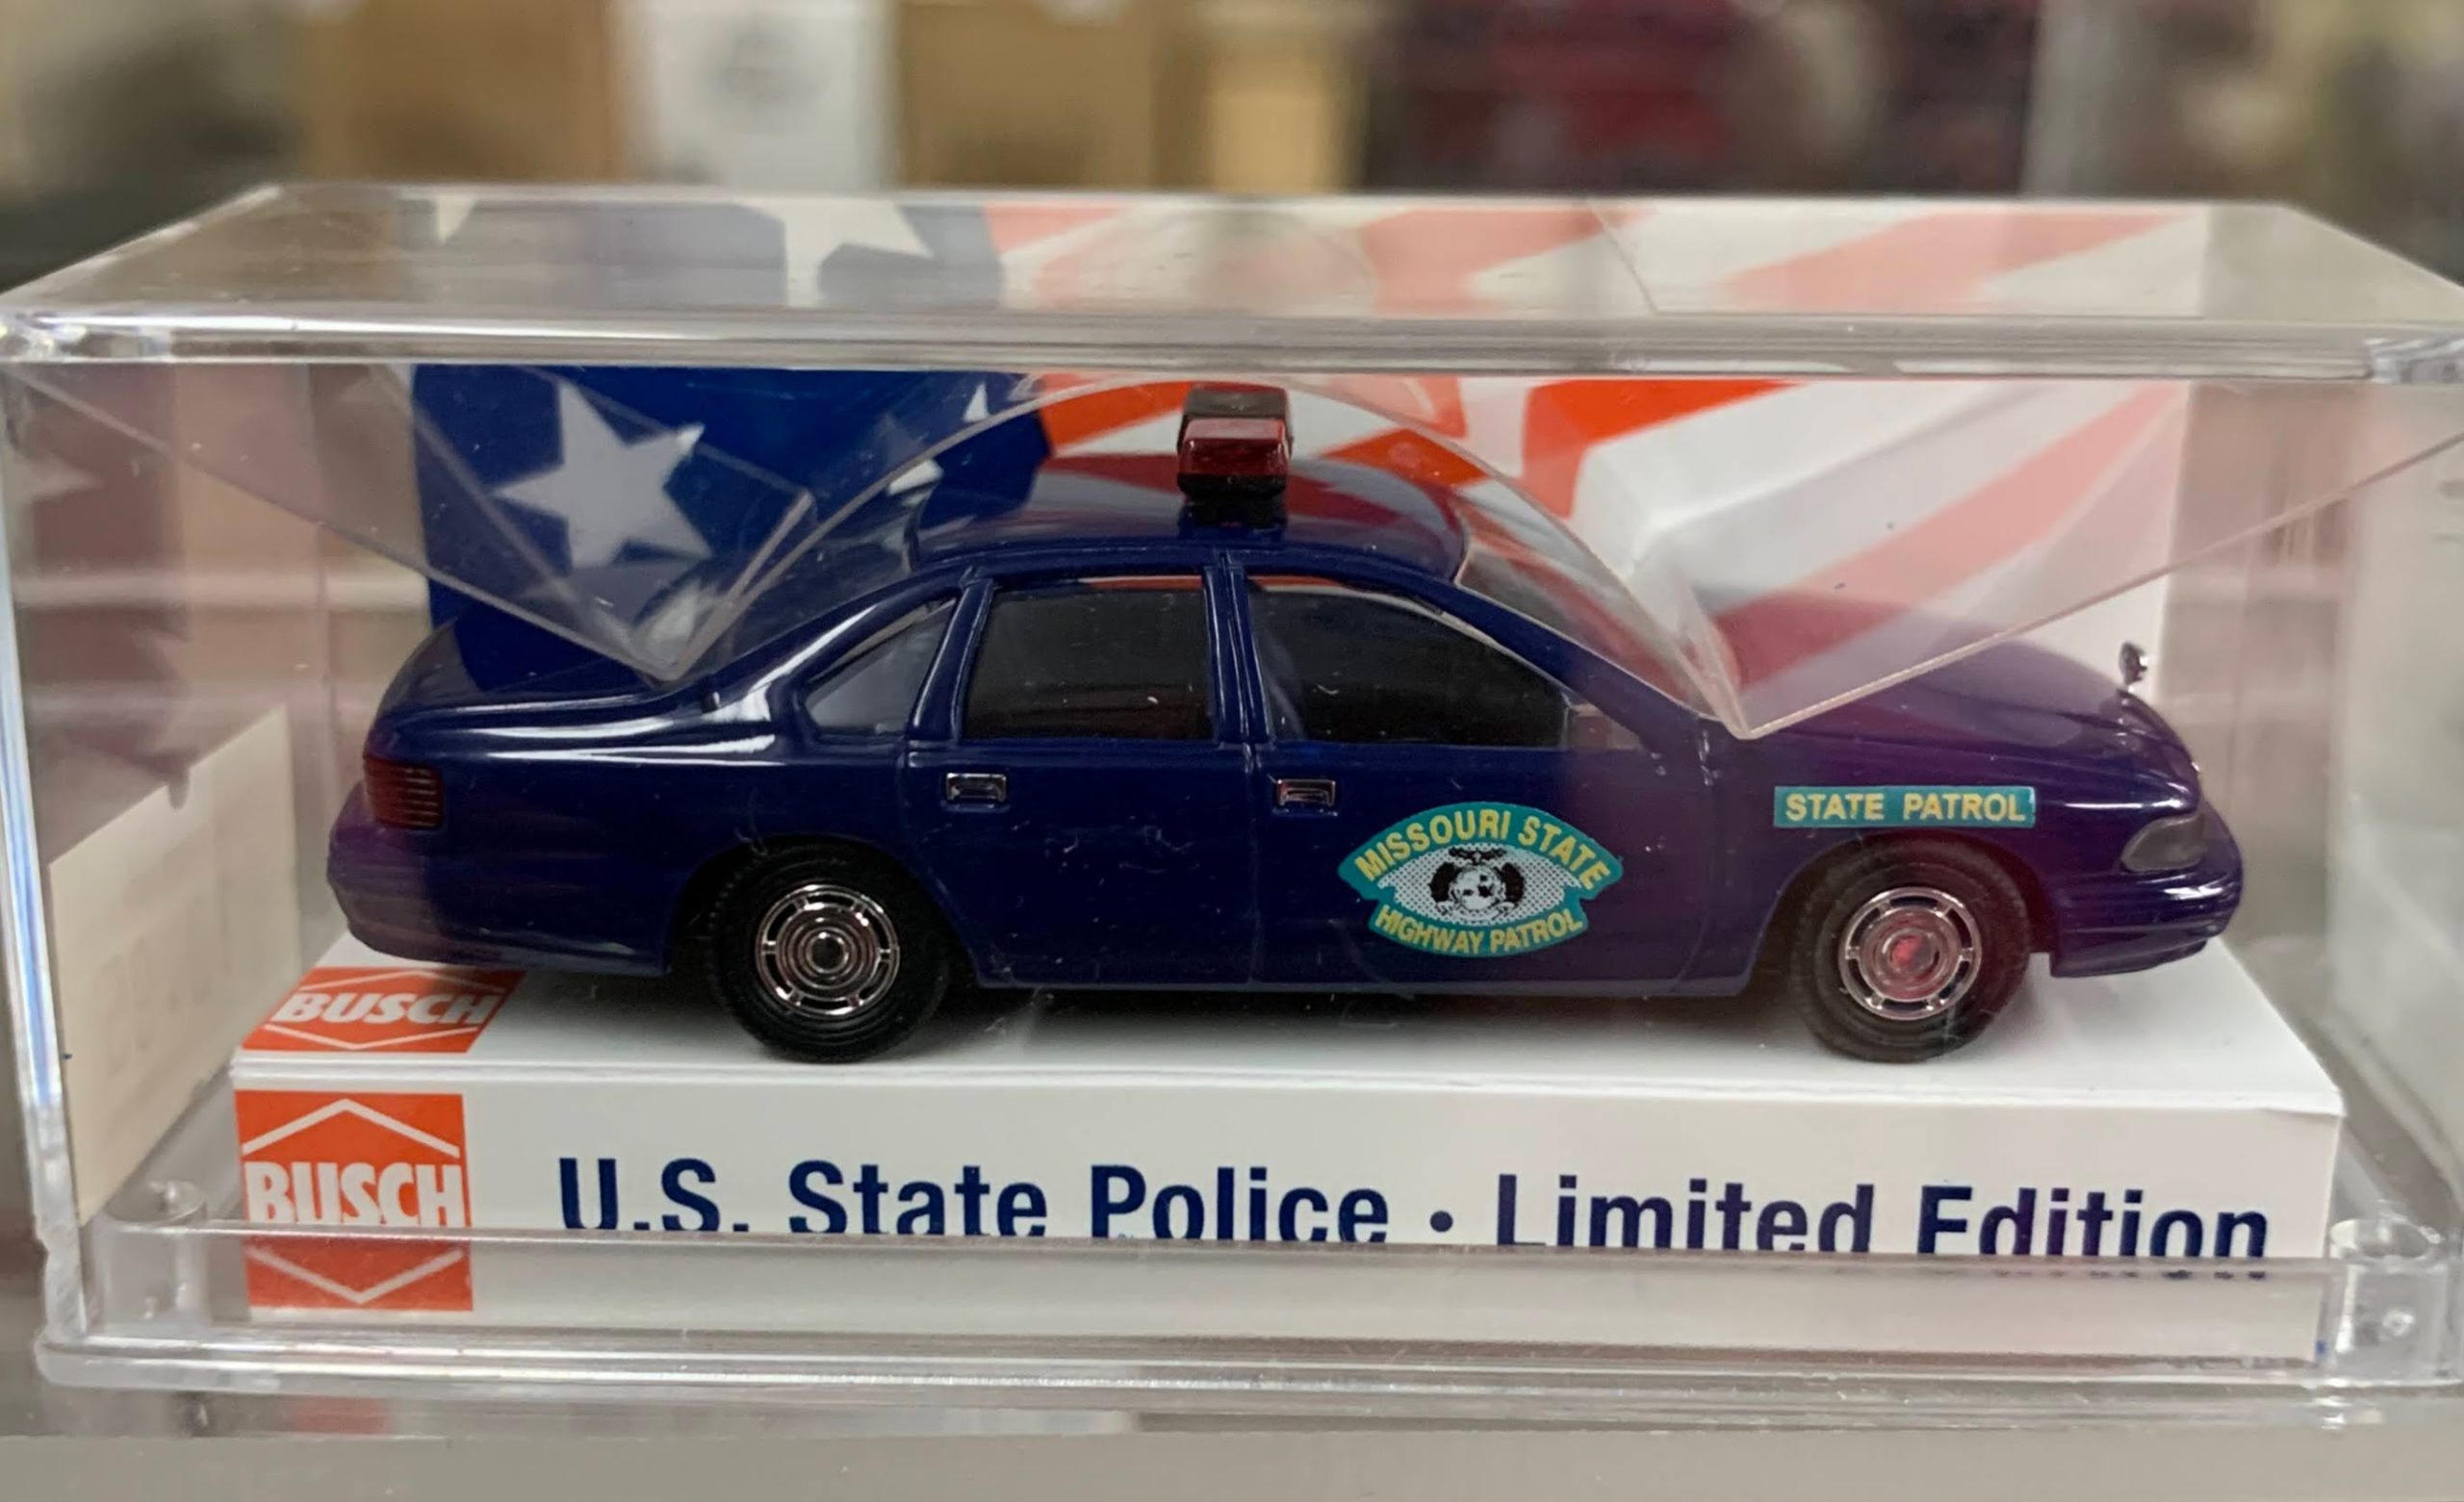 U.S. State Police Series - Missouri